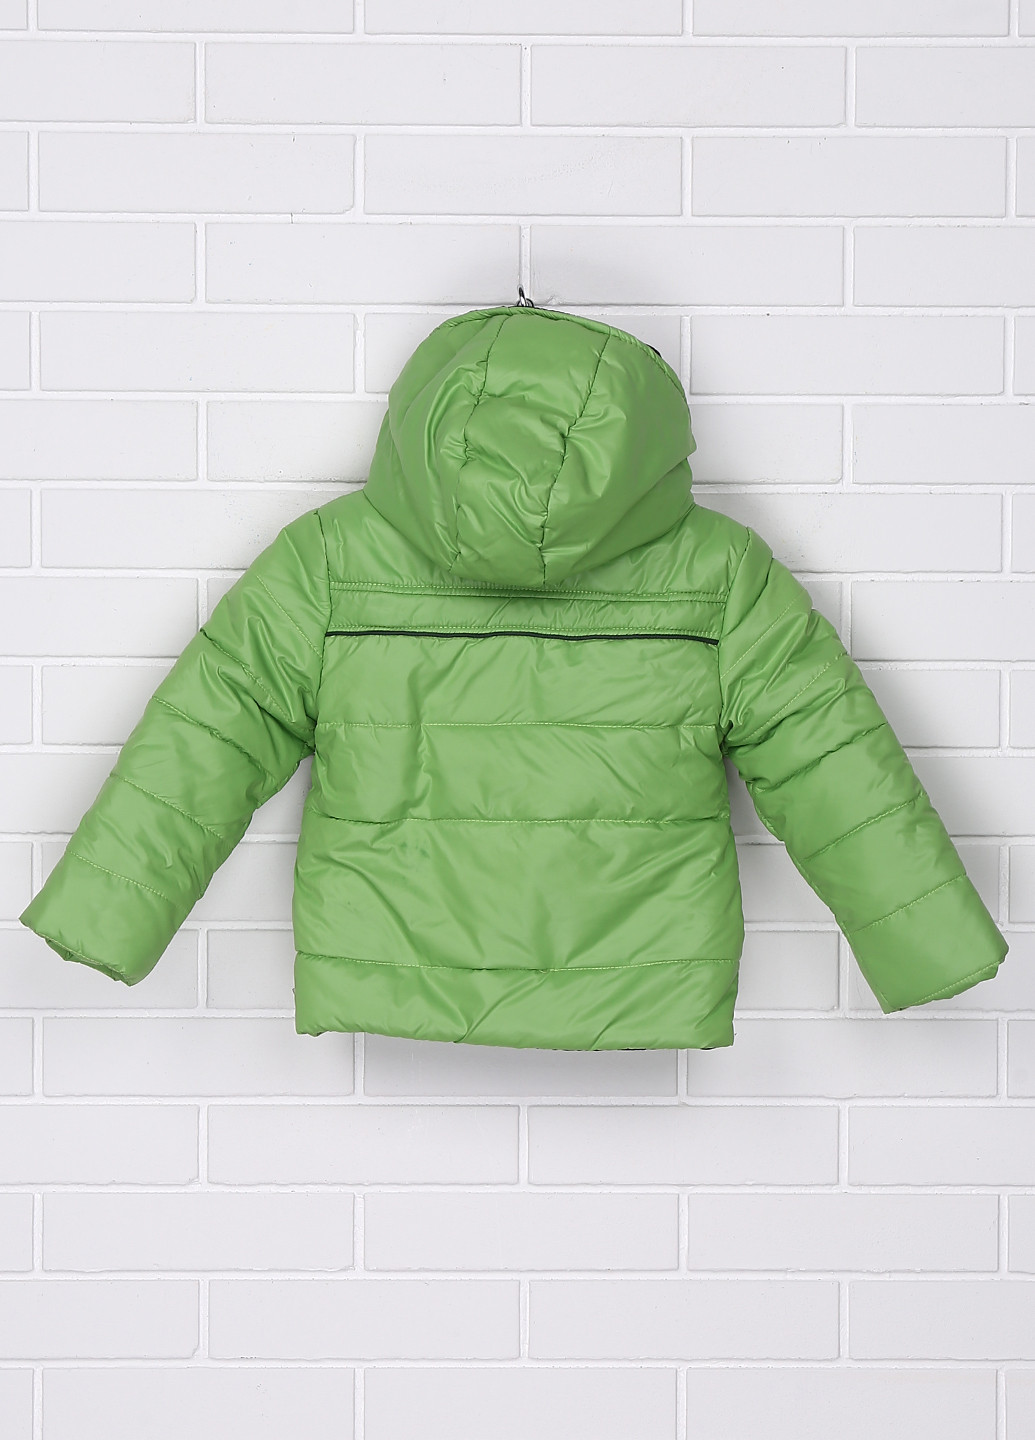 Зеленая зимняя куртка Одягайко